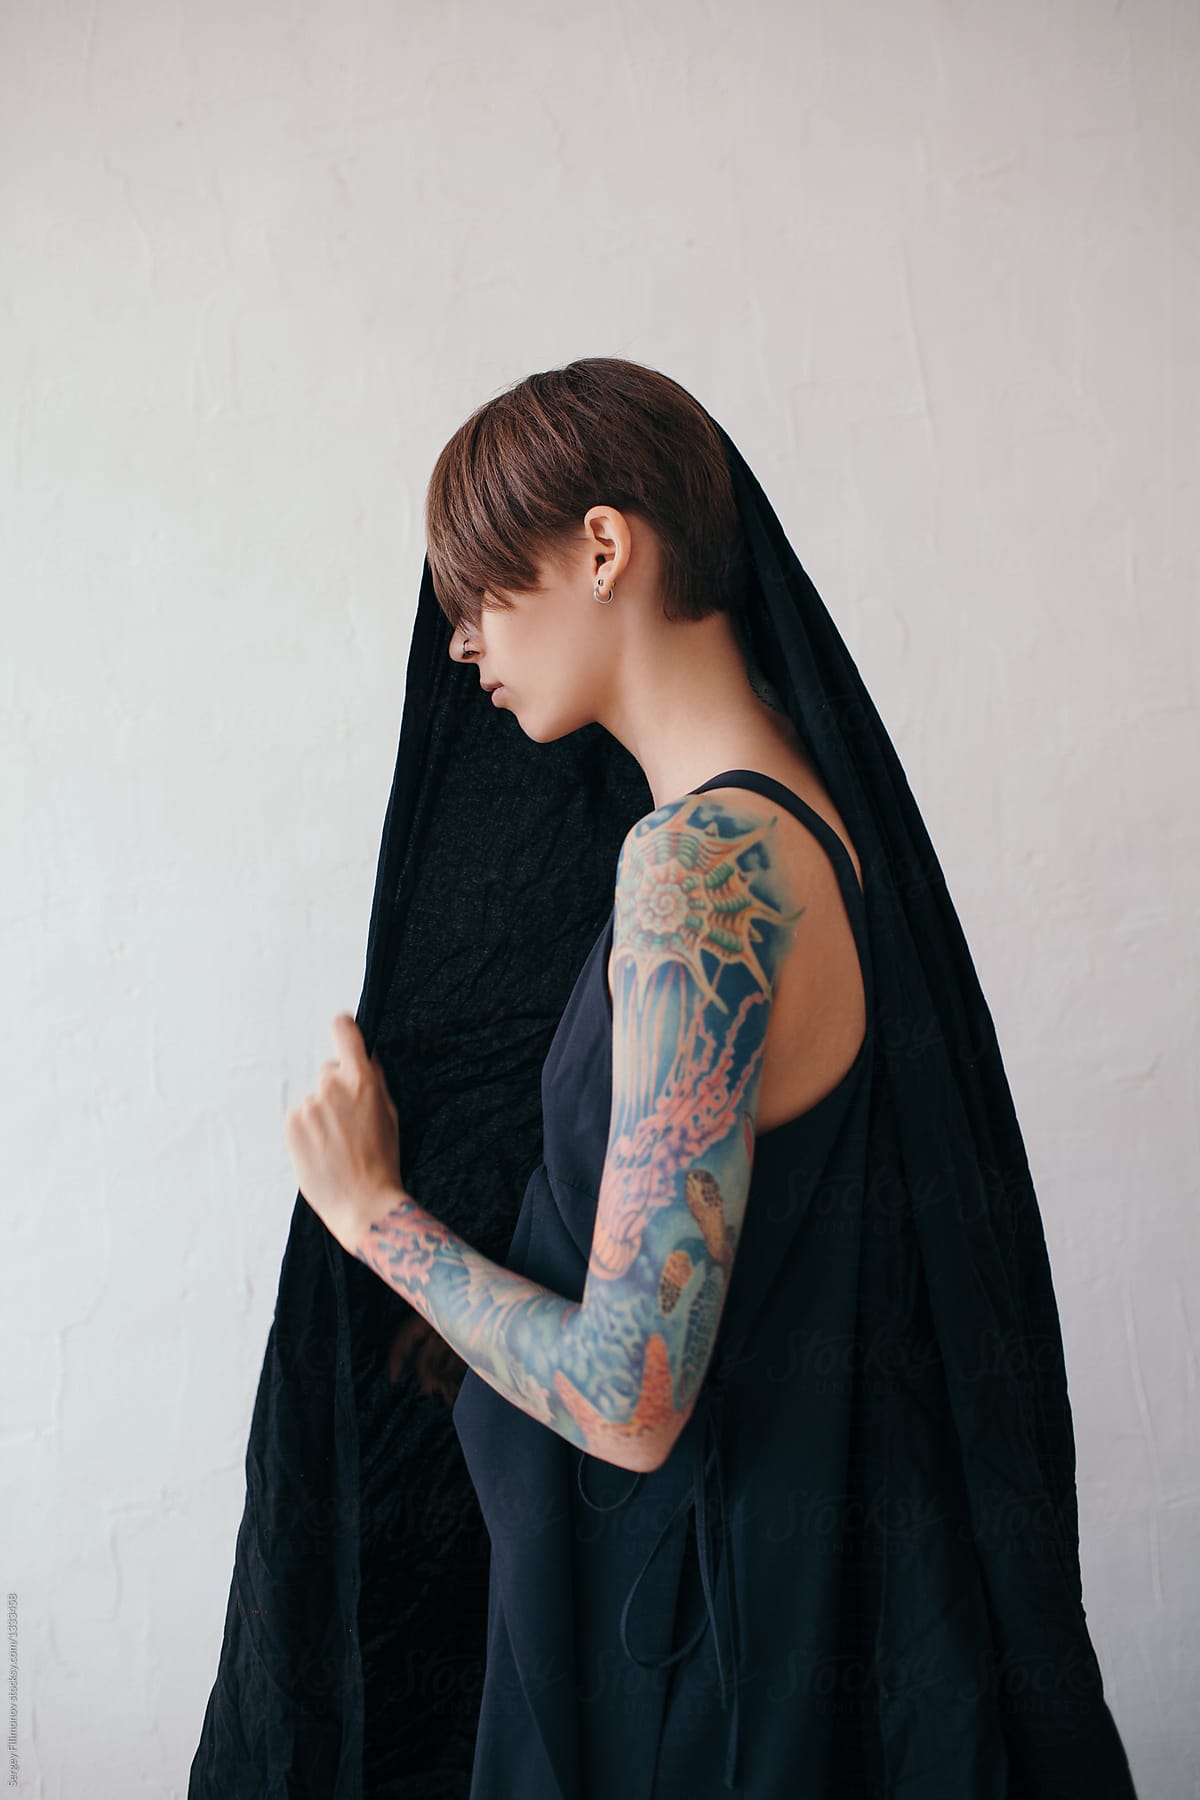 Fashion portrait of woman wearing black clothes